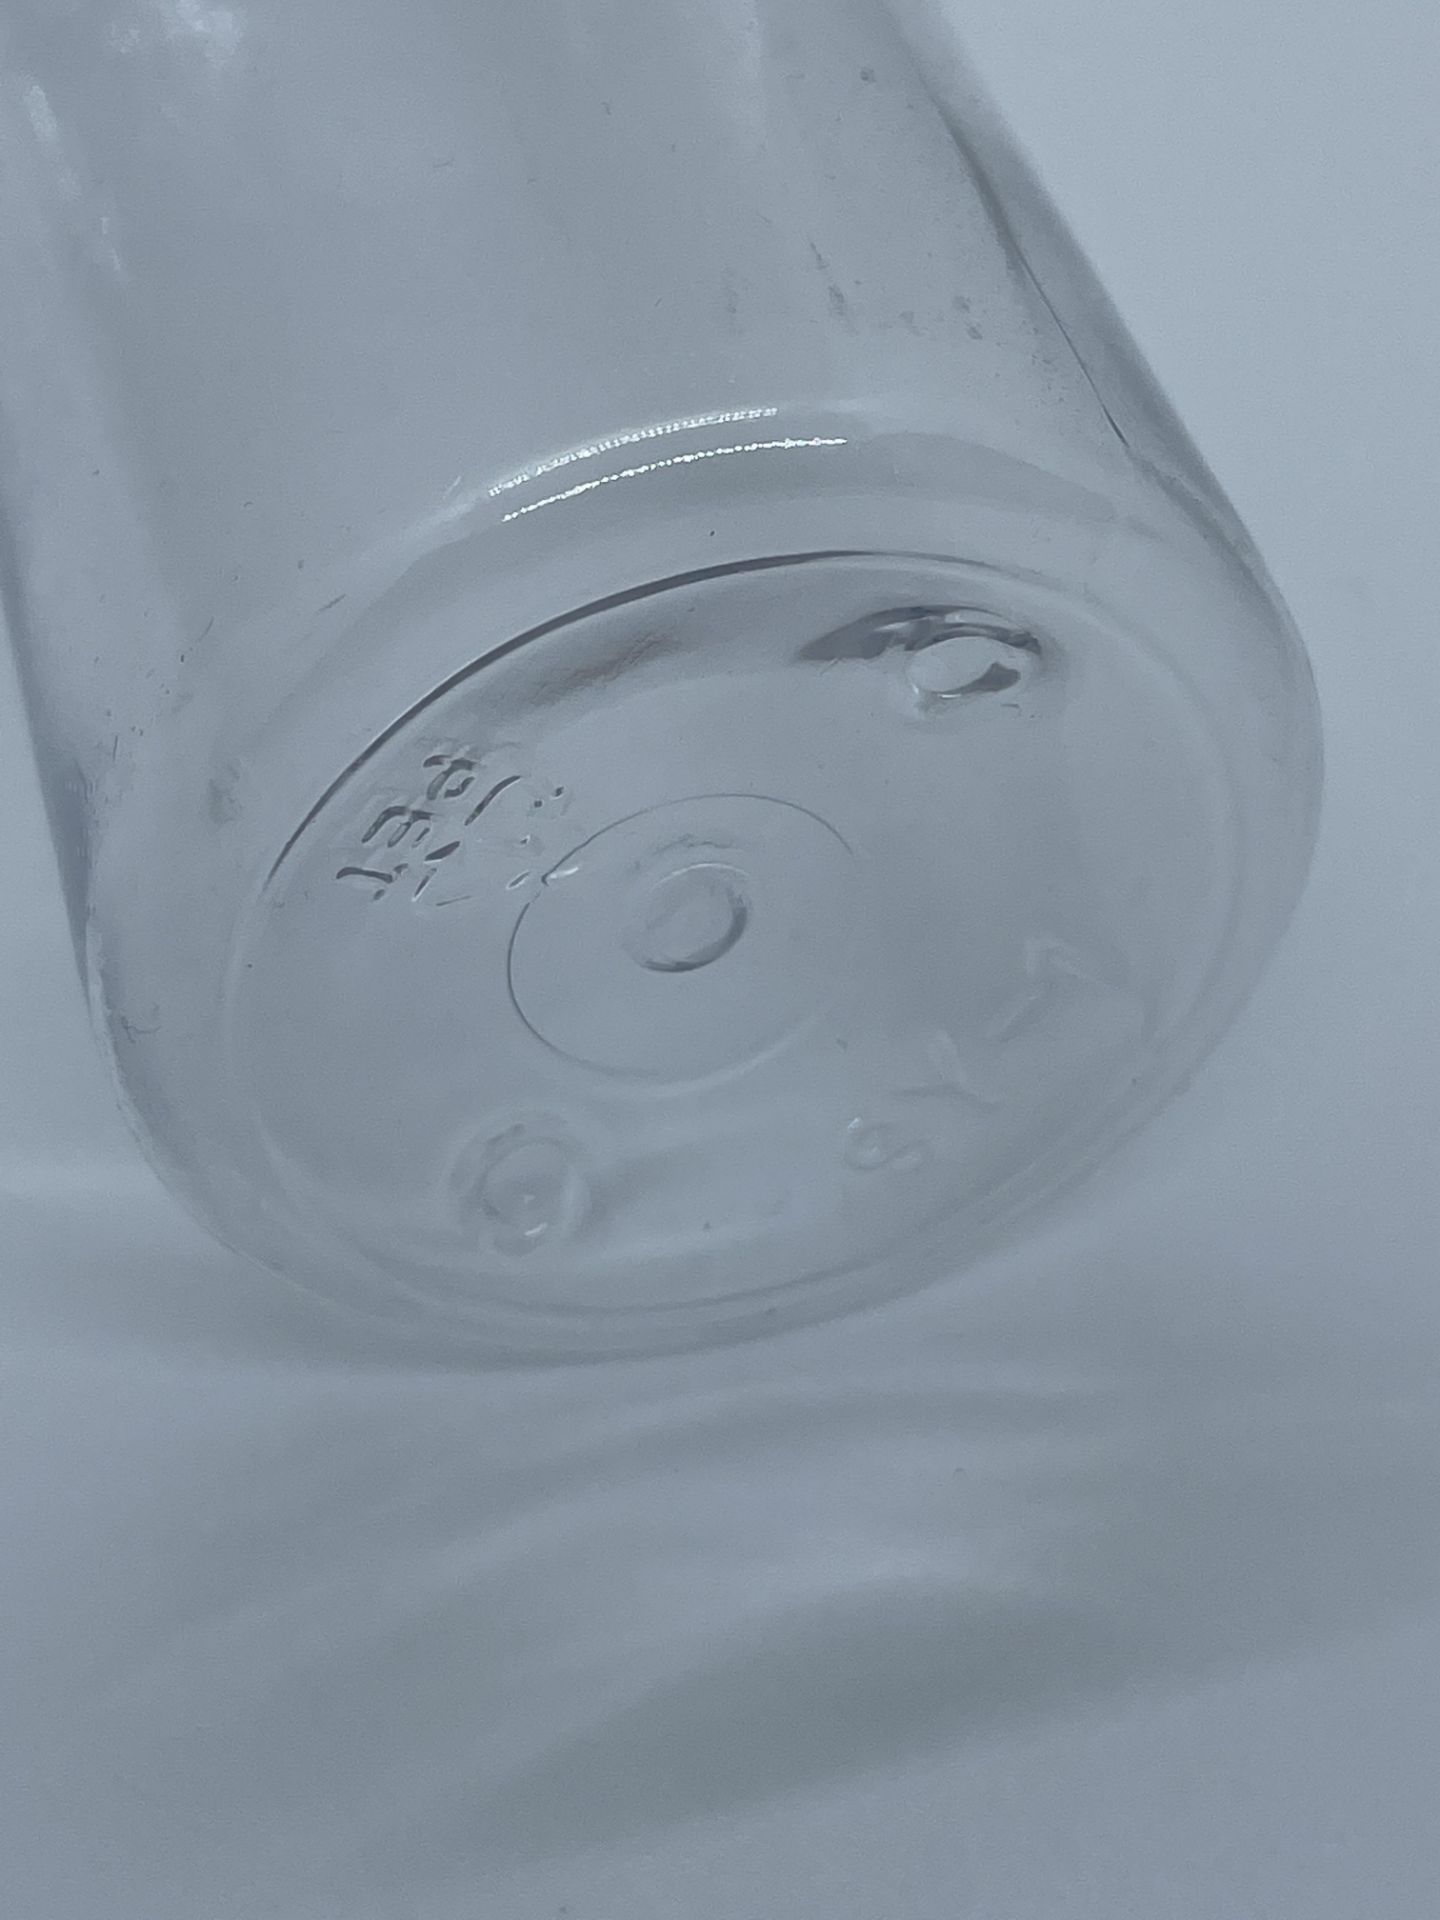 75,000 - Clear Plastic Bullet 8 oz Empty Bottles, 24-410 Threading Neck, 6.25" Tall, 2" Diameter - Image 5 of 5